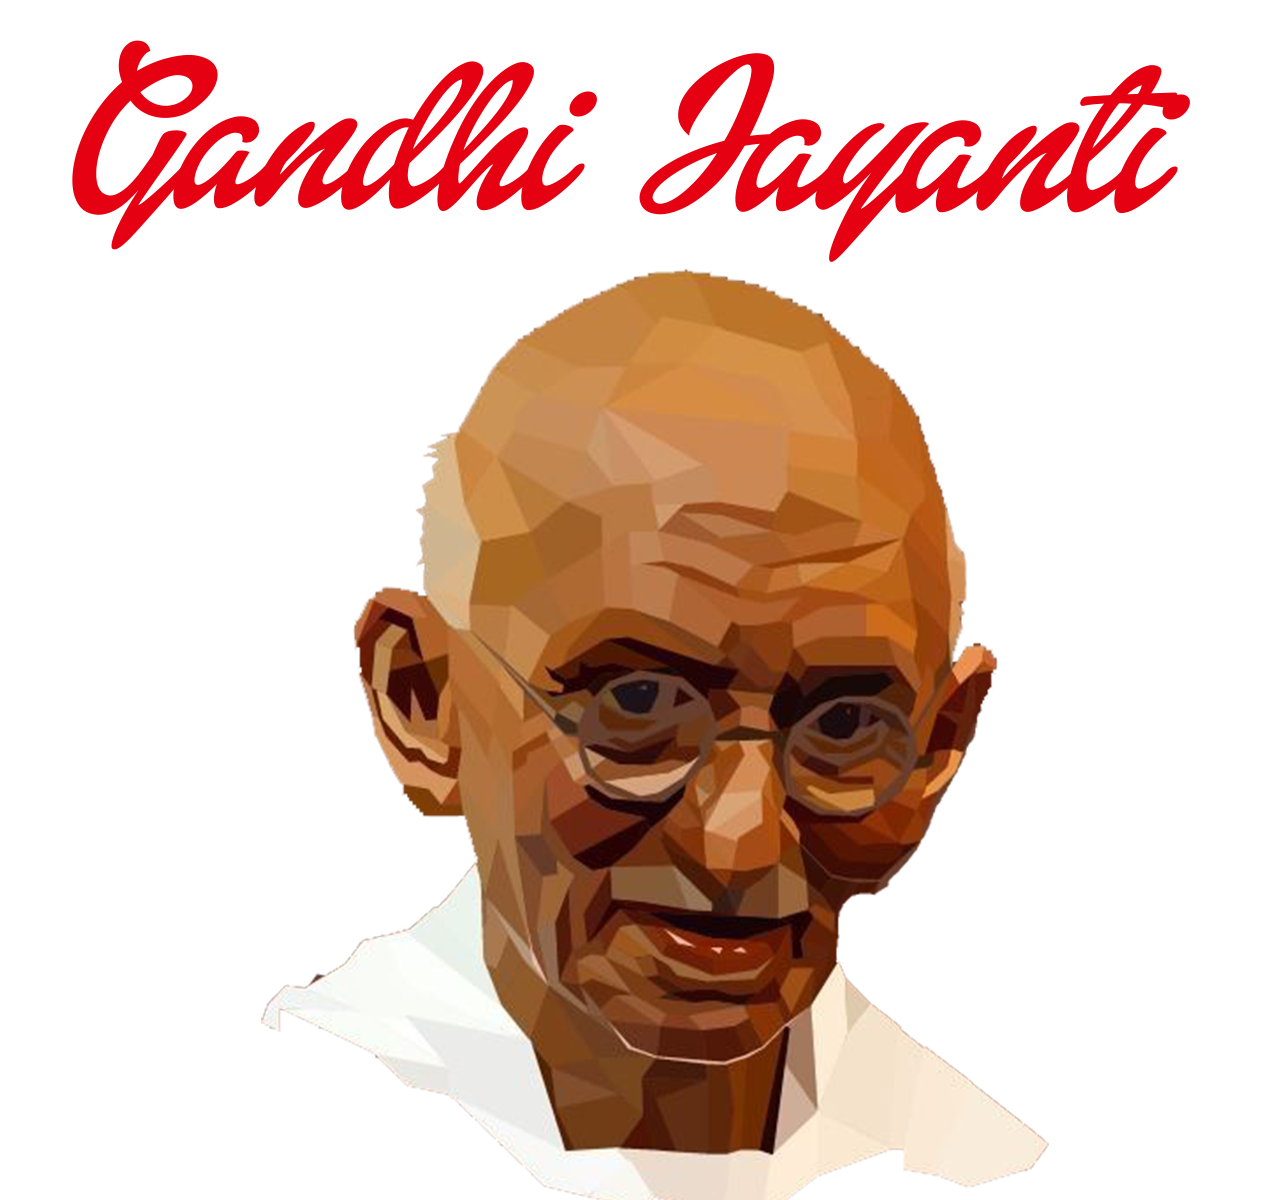 Gandhi Jayanti PNG HD Images pngteam.com